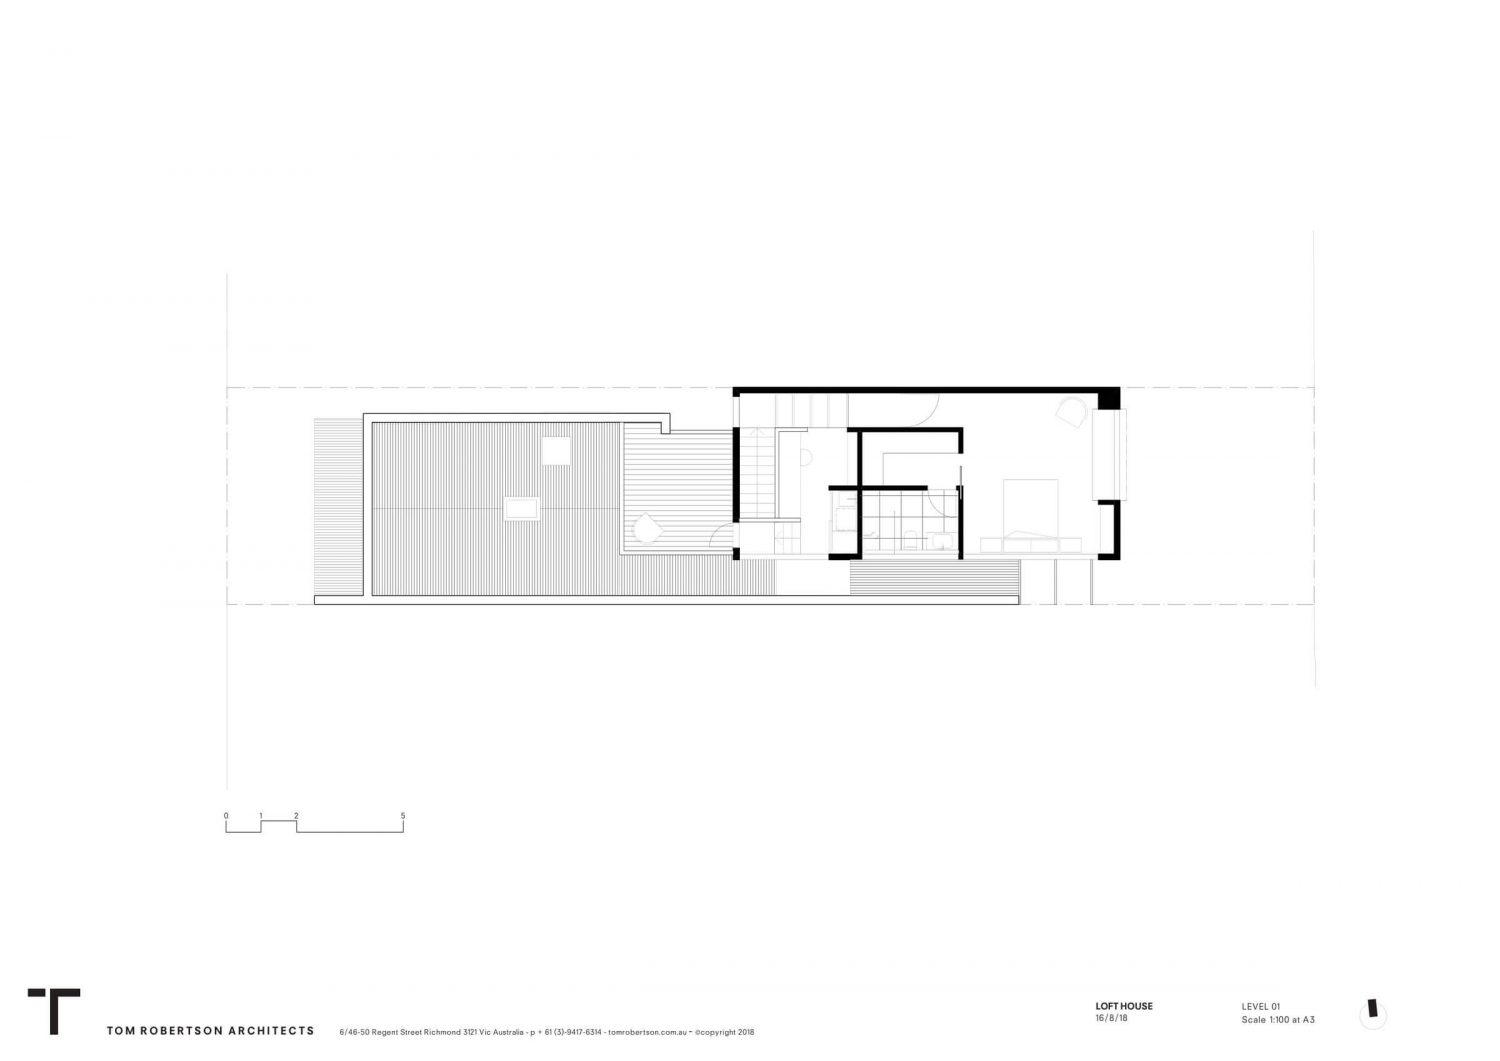 Loft House by Tom Robertson Architects